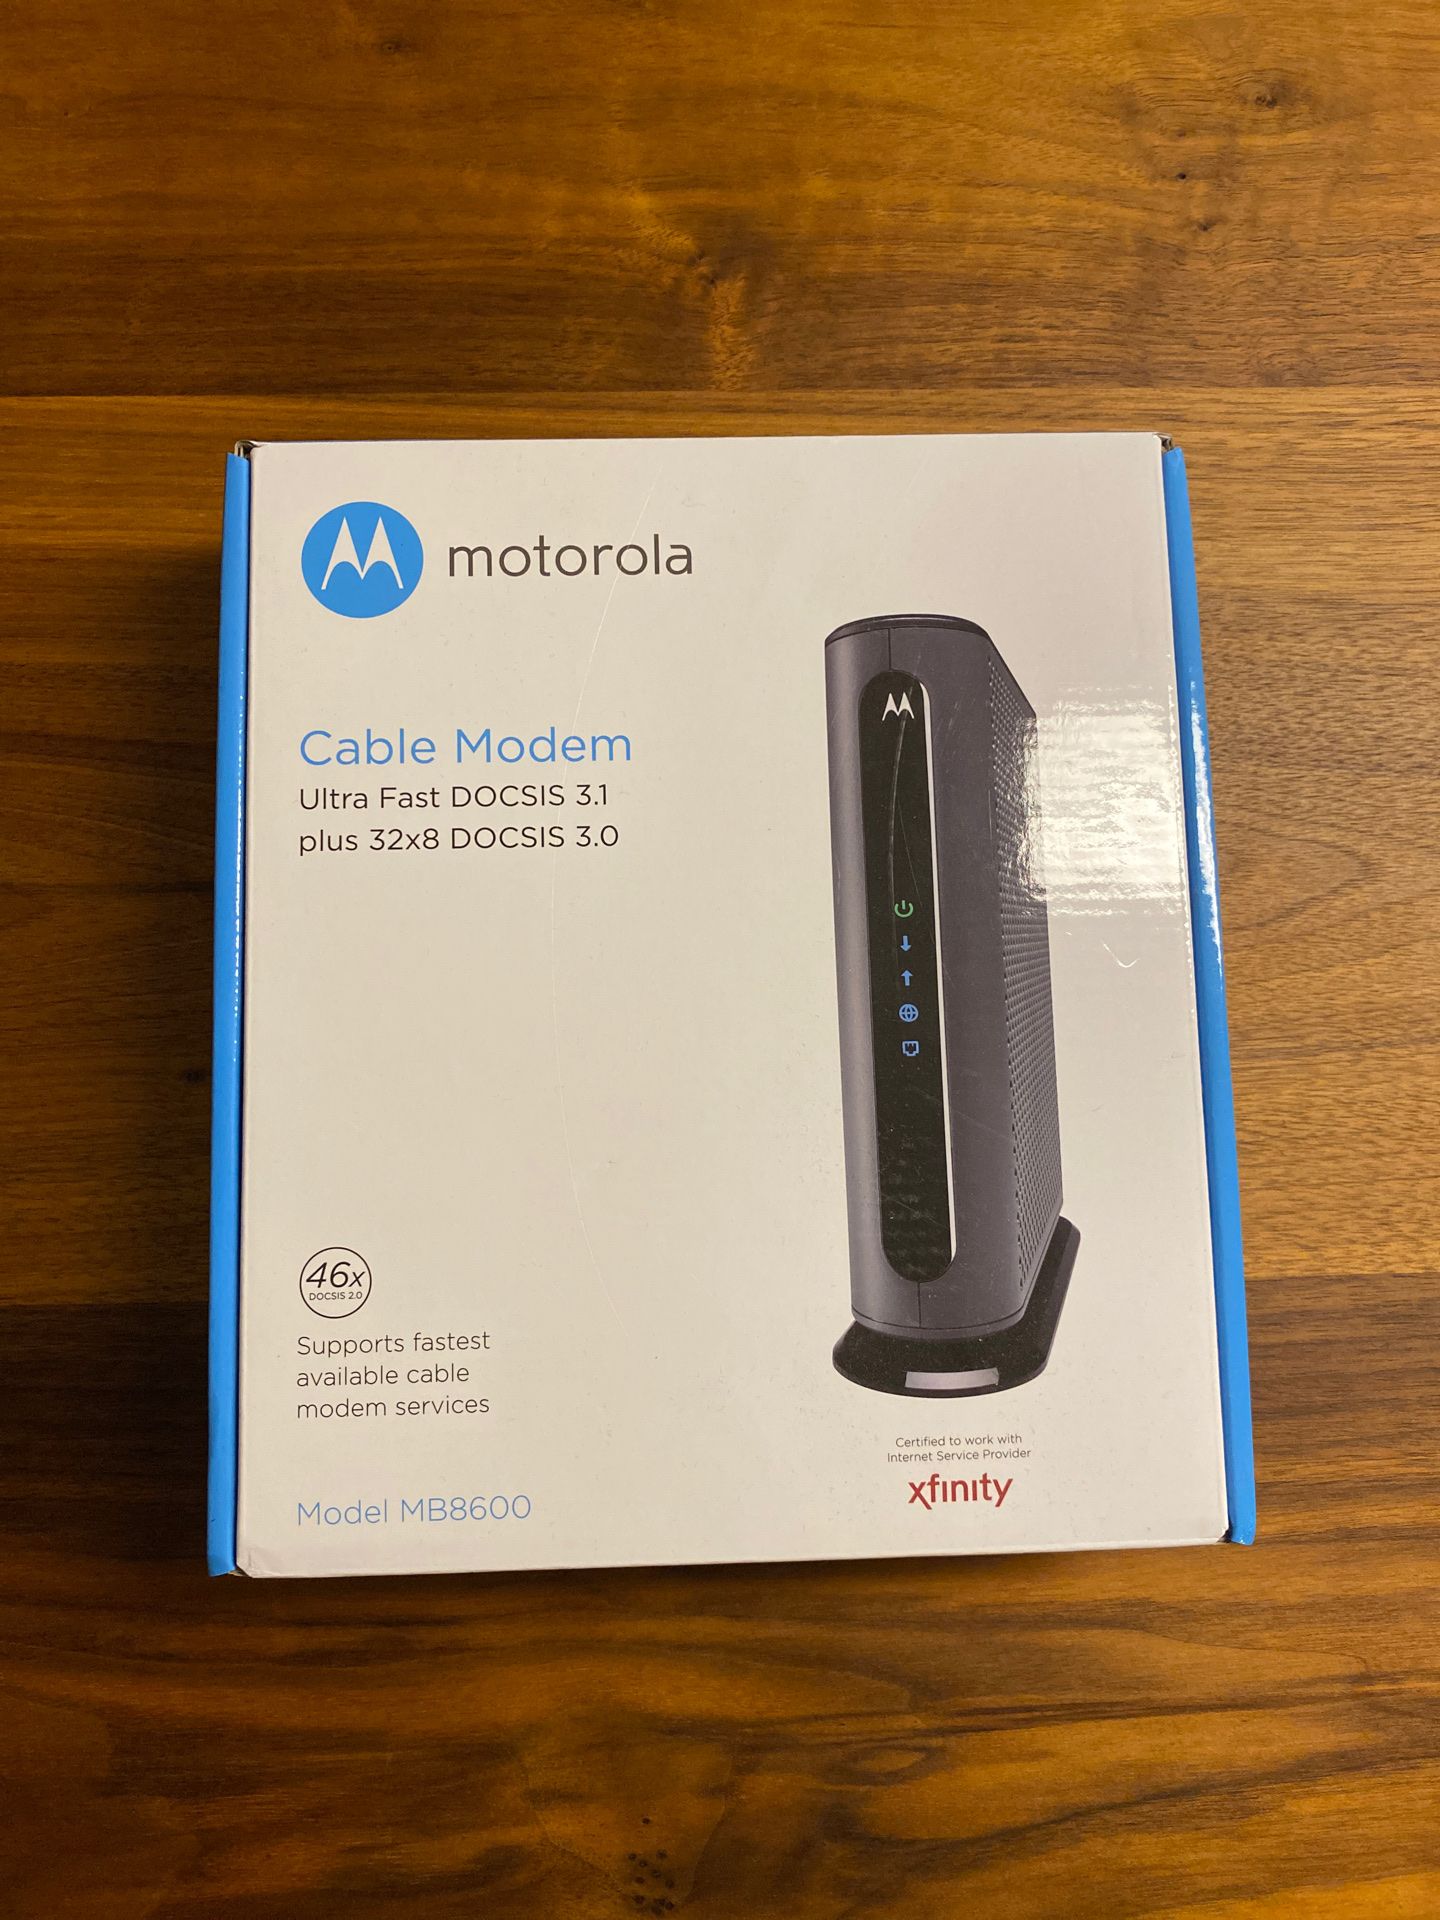 Motorola MB8600 modem for Comcast Xfinity Internet